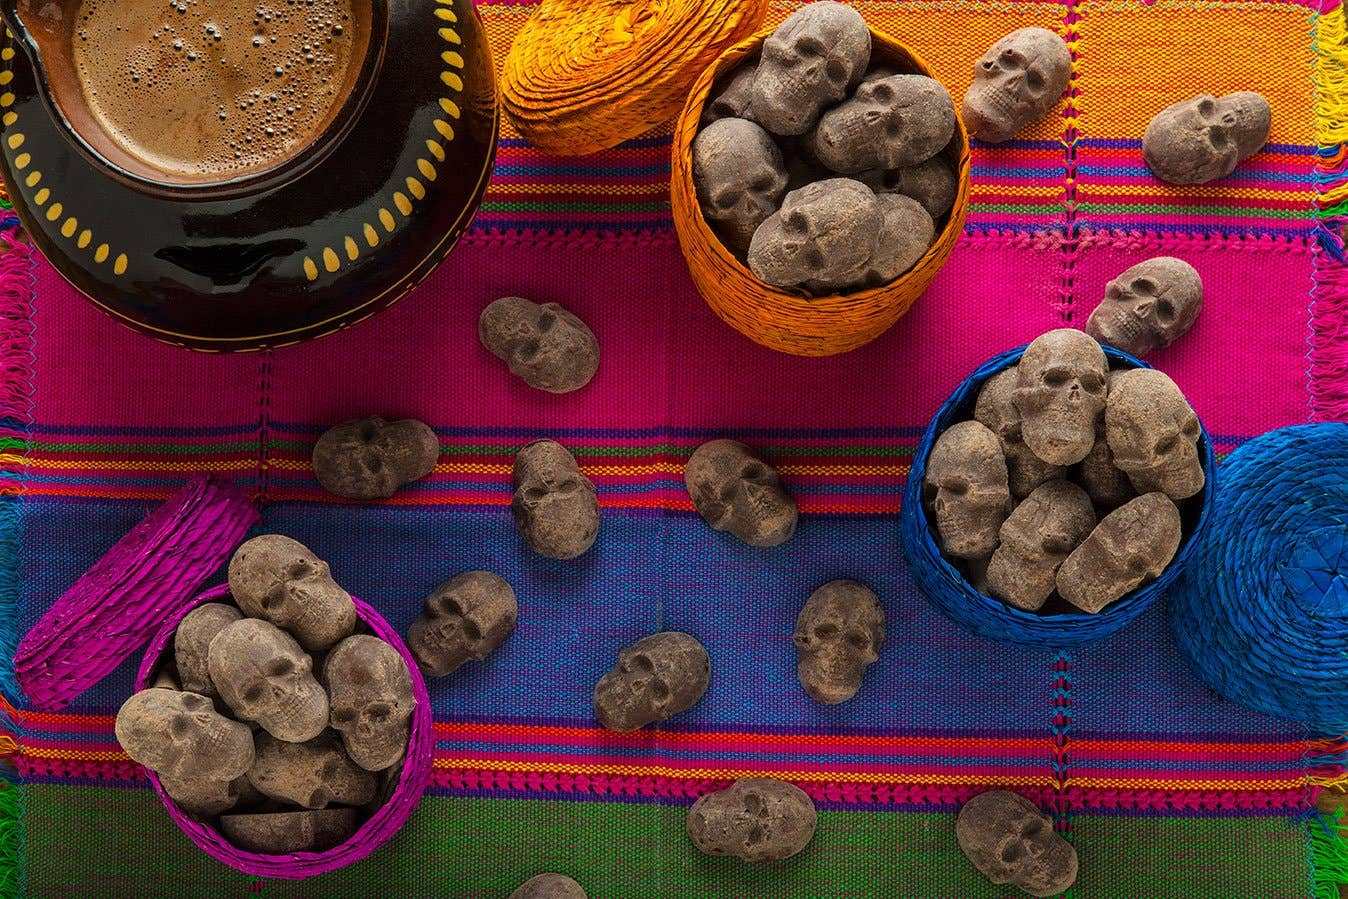 Cinnamon Mexican Chocolate SKULLS in Basket - 240g